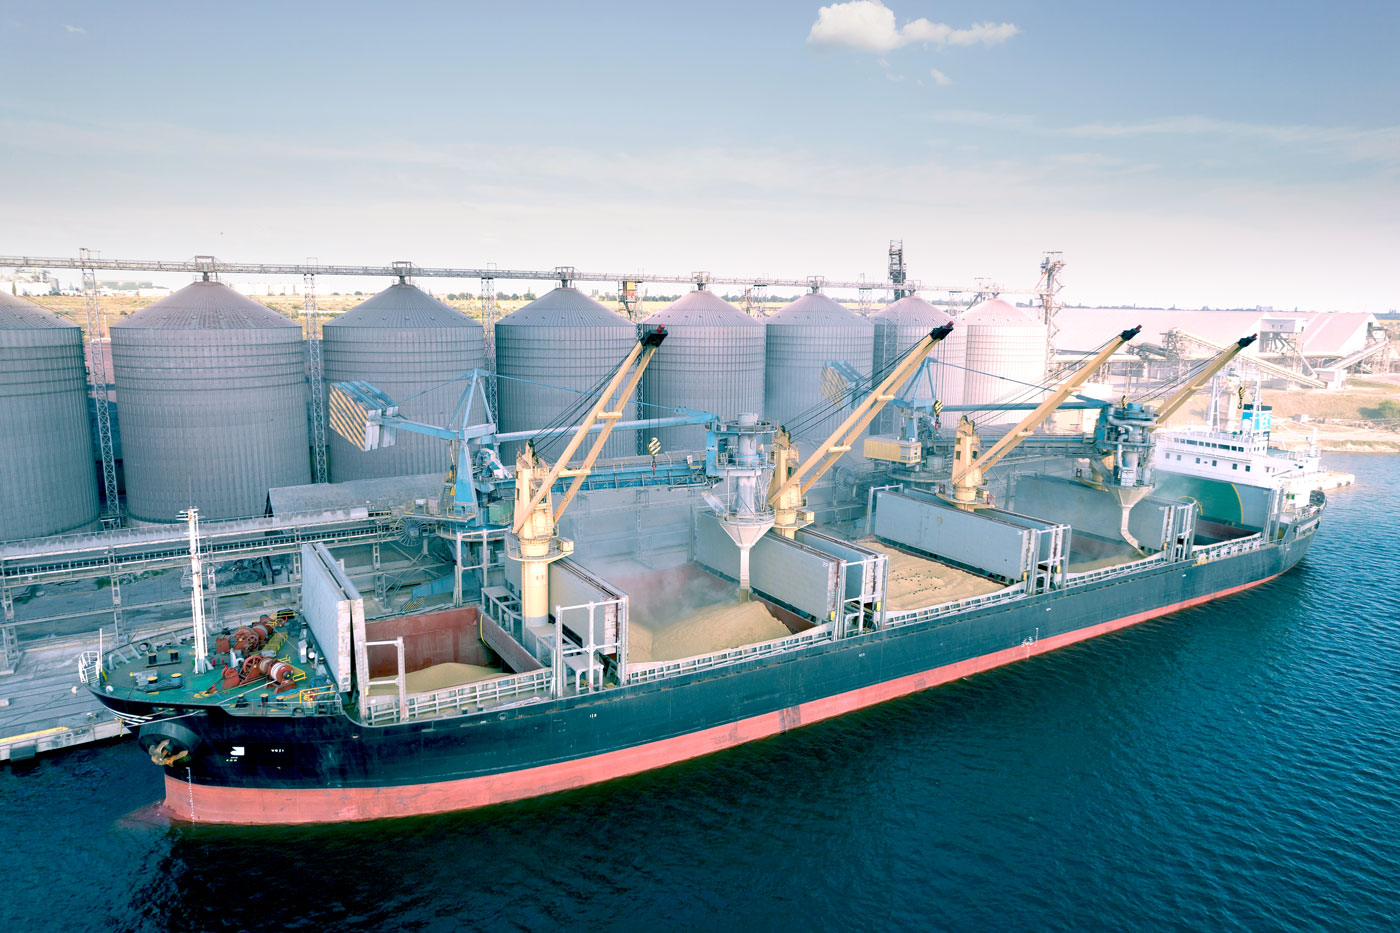 grain ship docked with grain bins in background